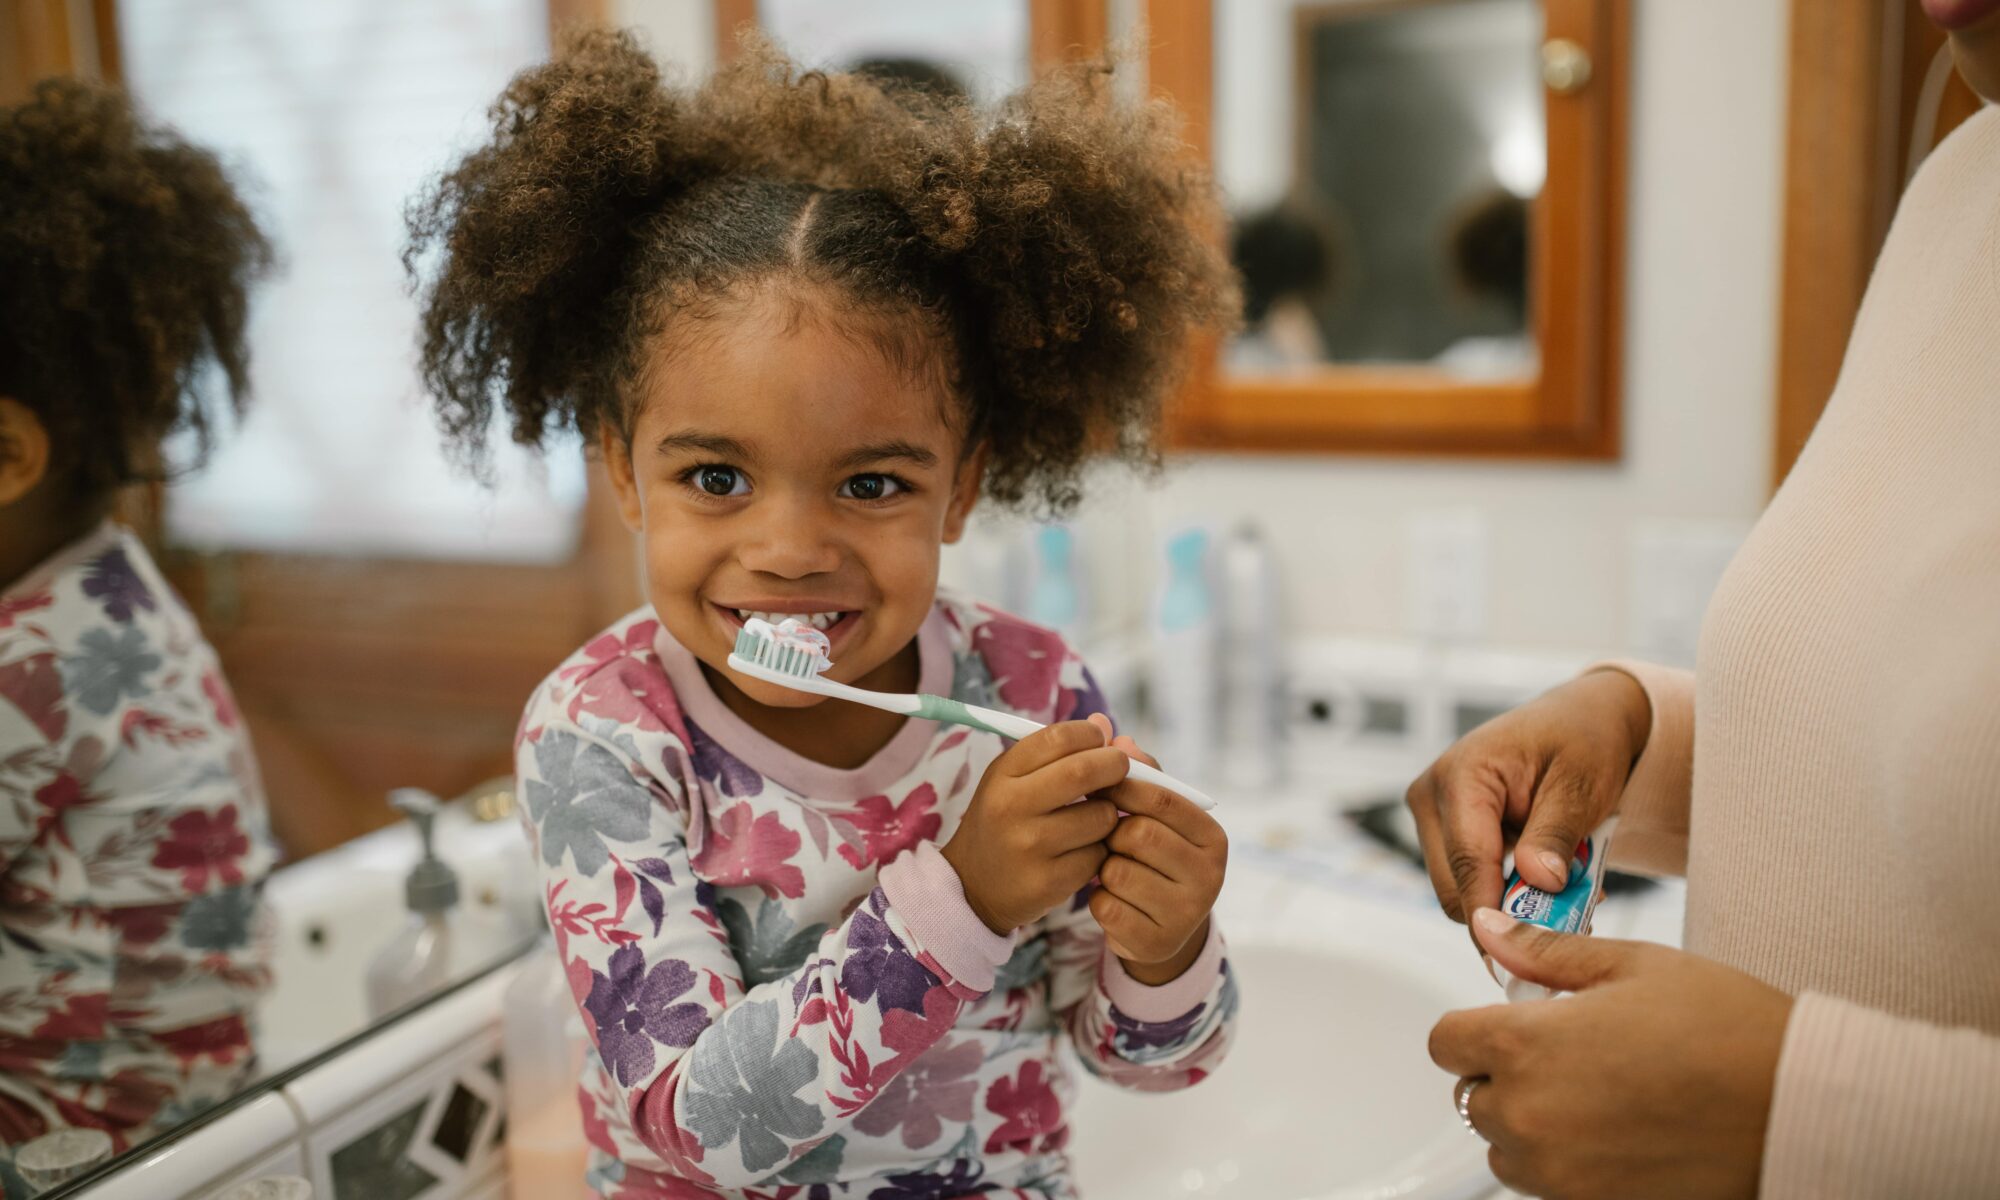 A kid brushing her teeth